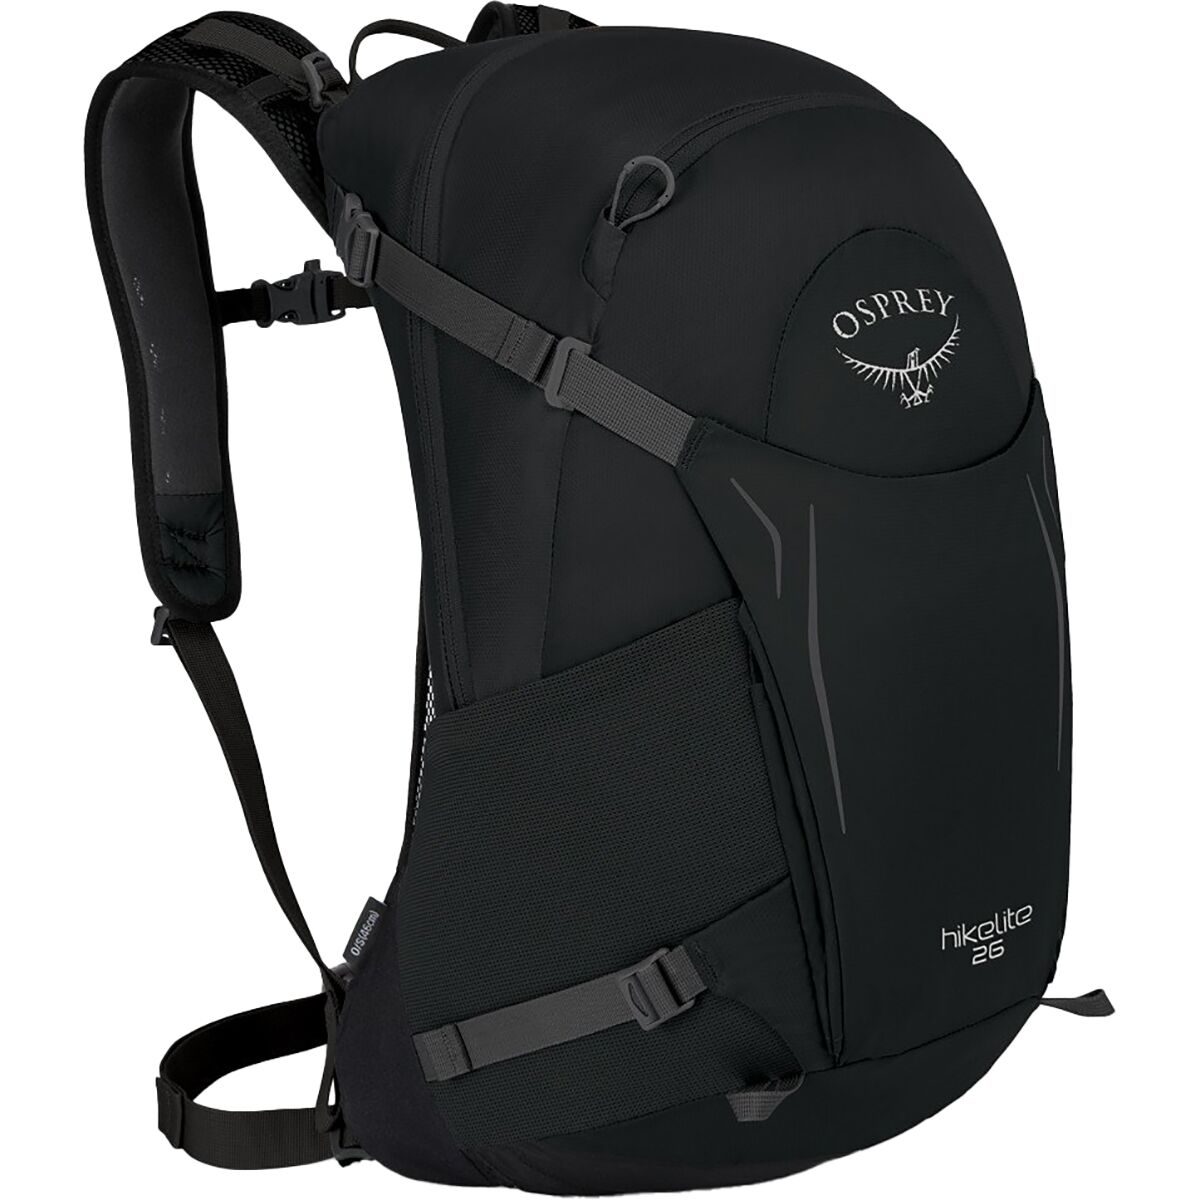 Osprey Packs Hikelite 26L Backpack